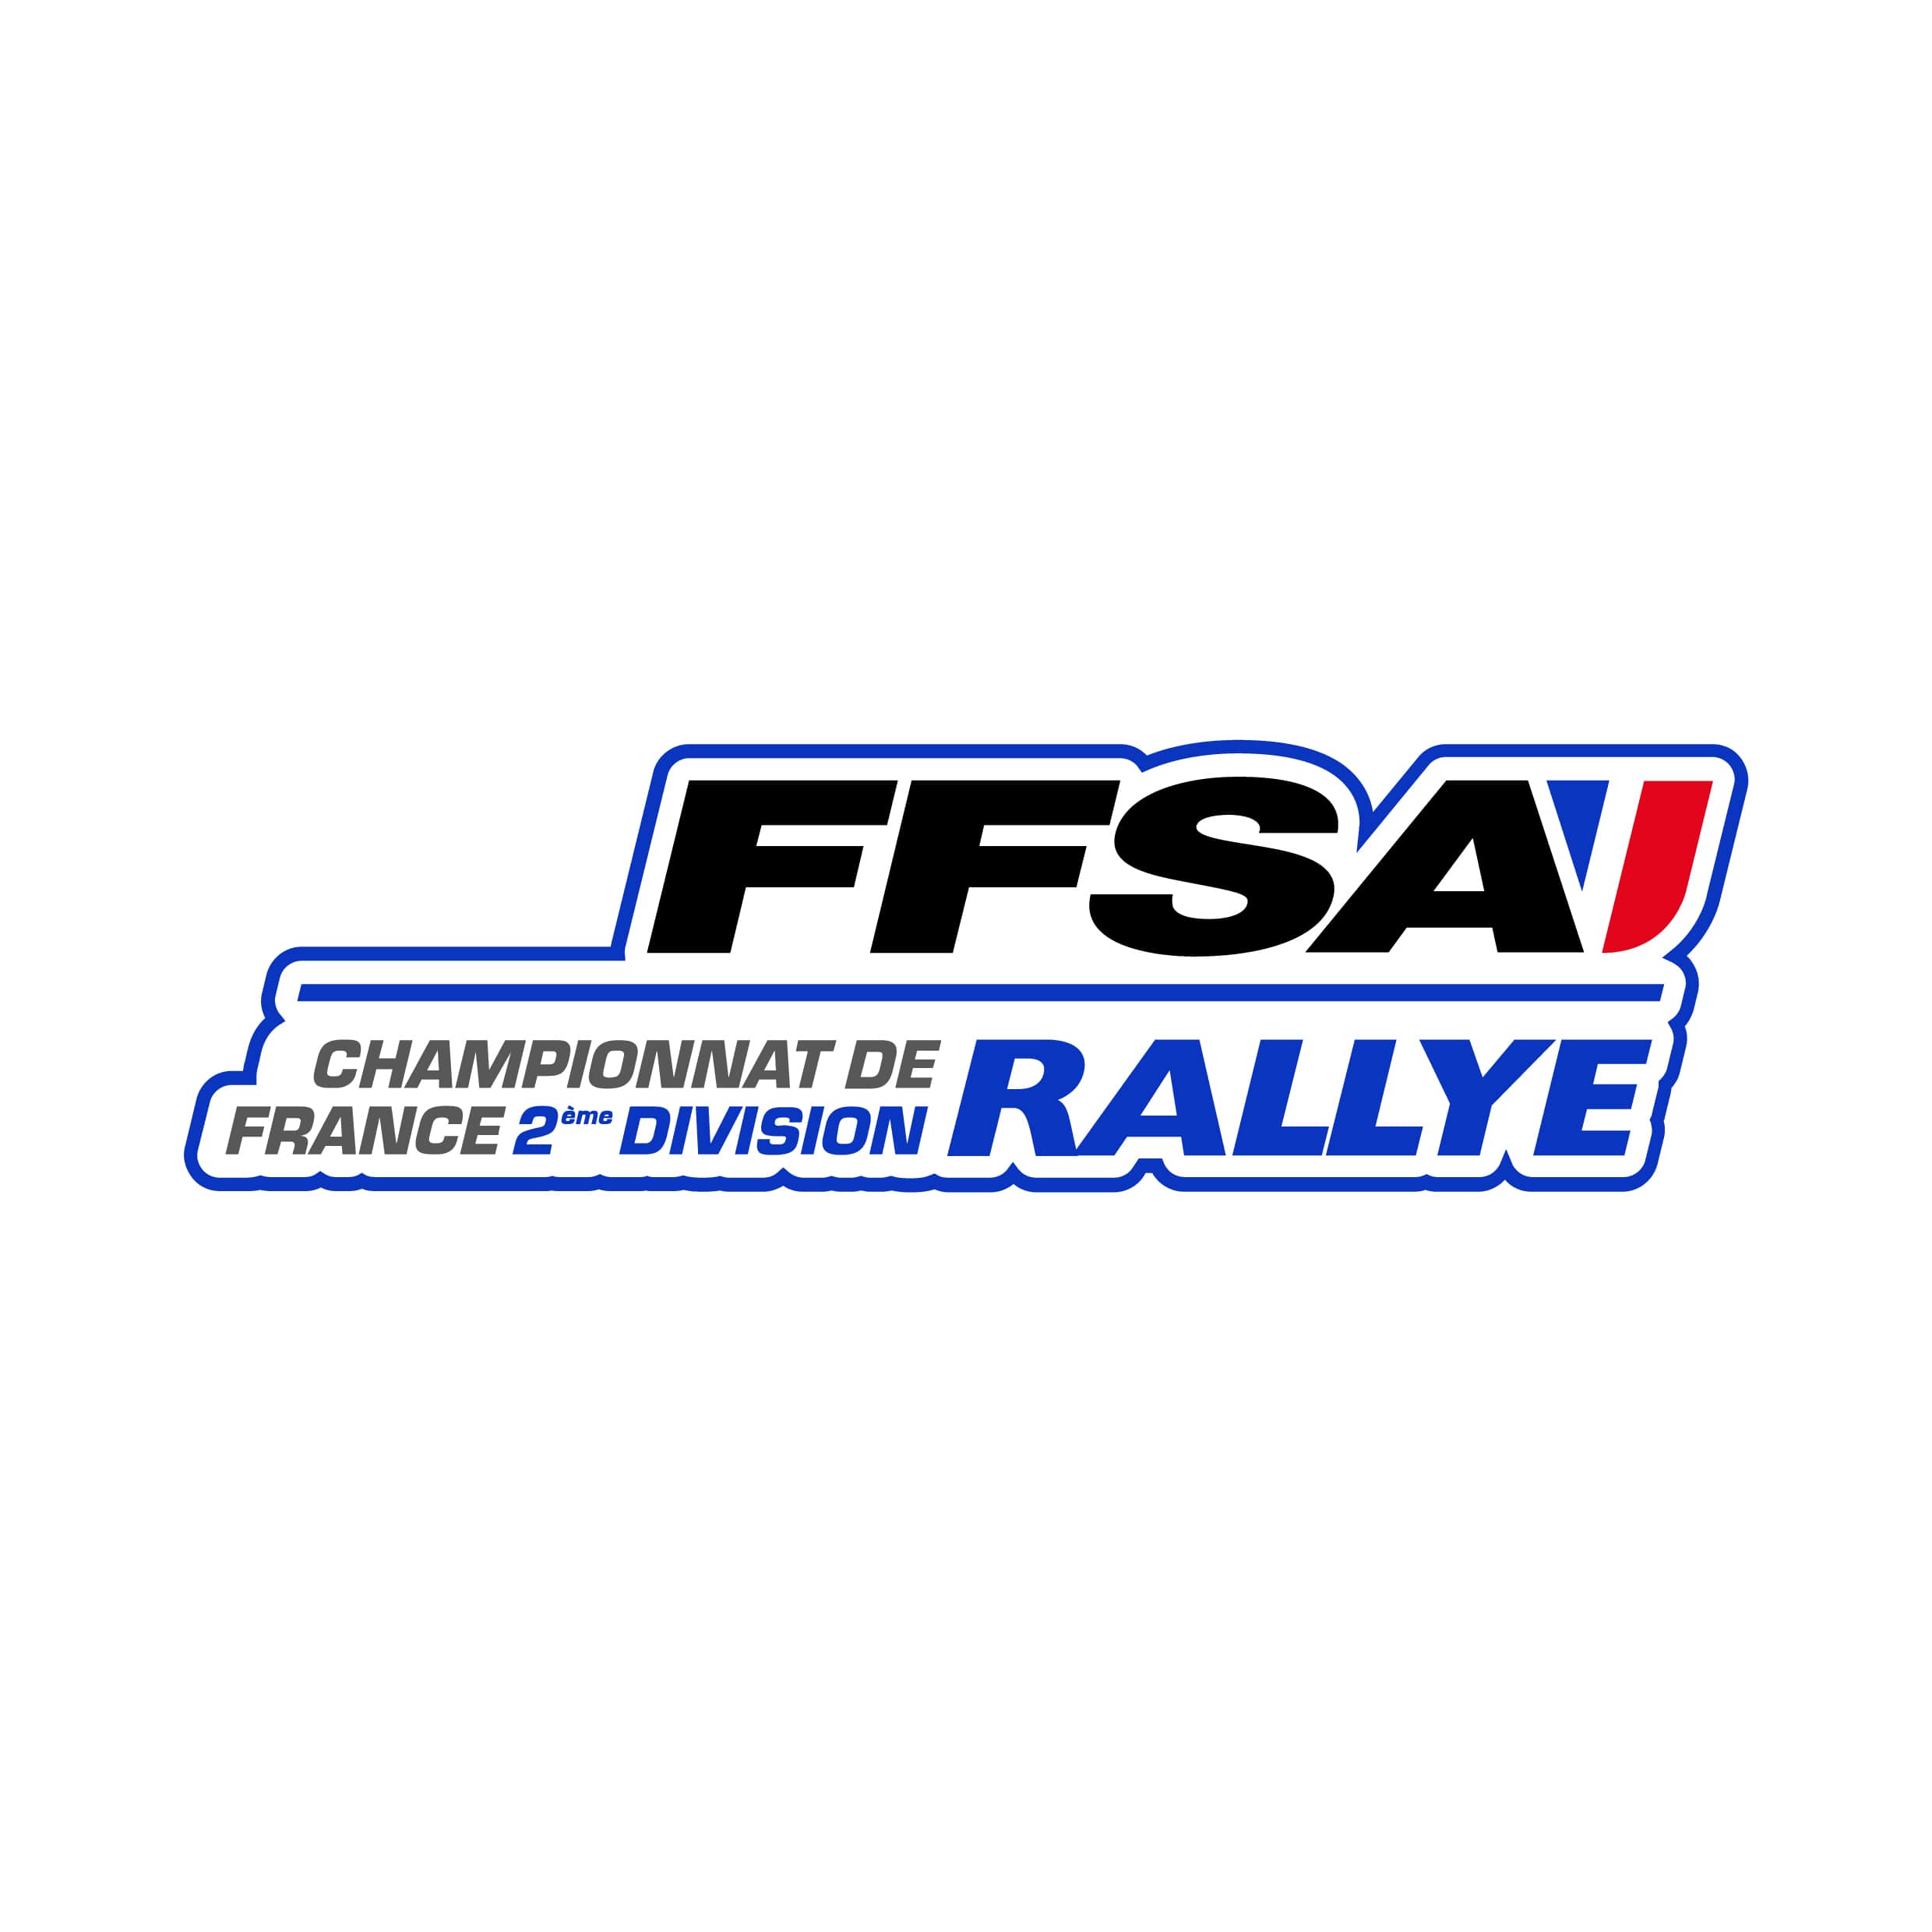 stickers-ffsa-championnat-france-2eme-division-rallye-ref18-sport-automobile-autocollant-voiture-sticker-auto-autocollants-decals-racing-min